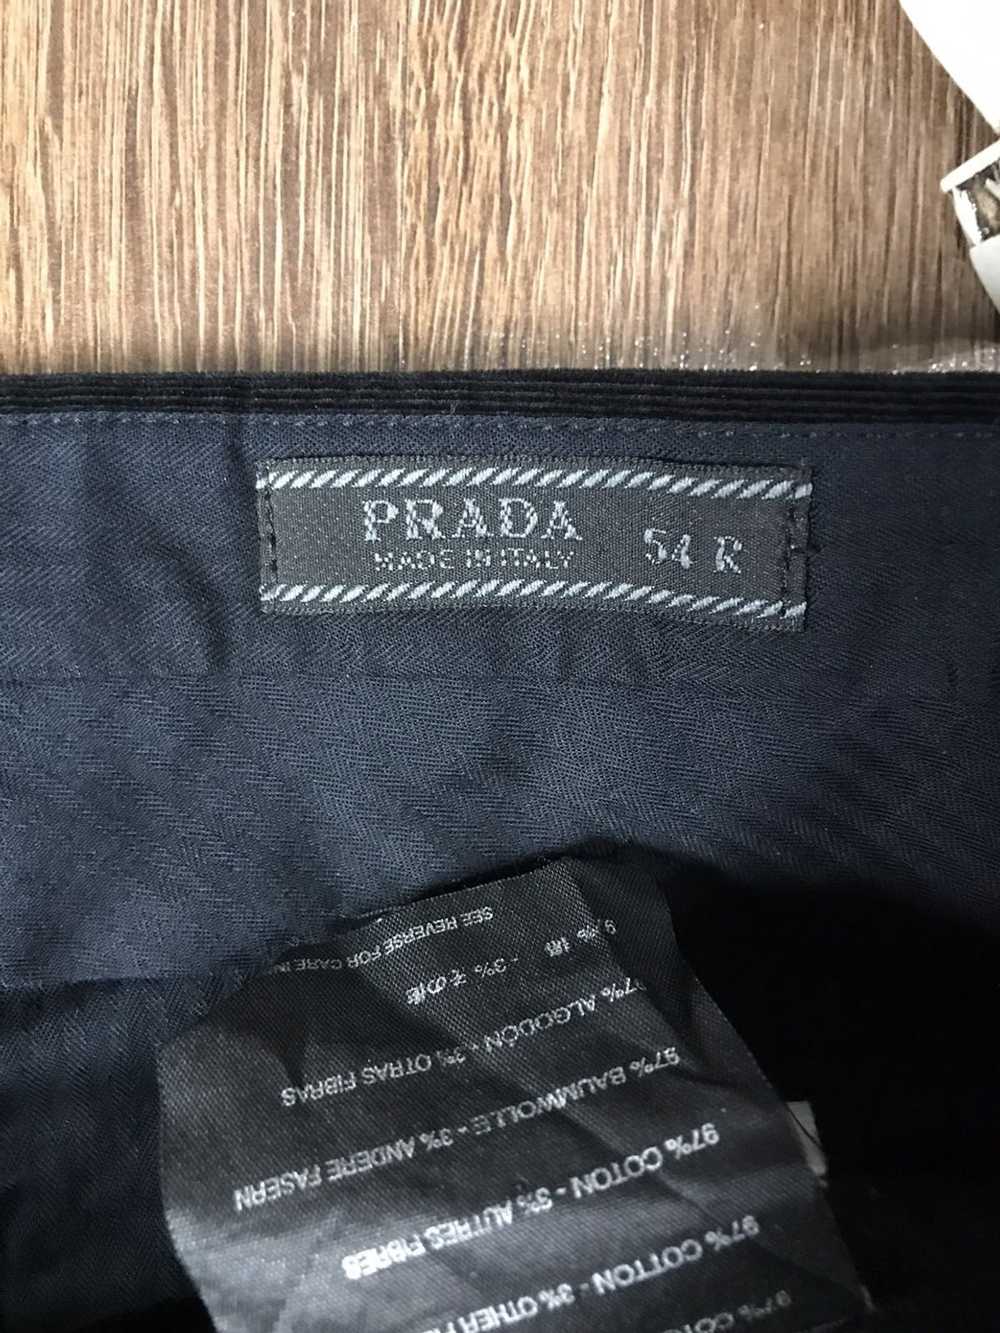 Prada Prada corduroy velvet classic casual pants - image 8